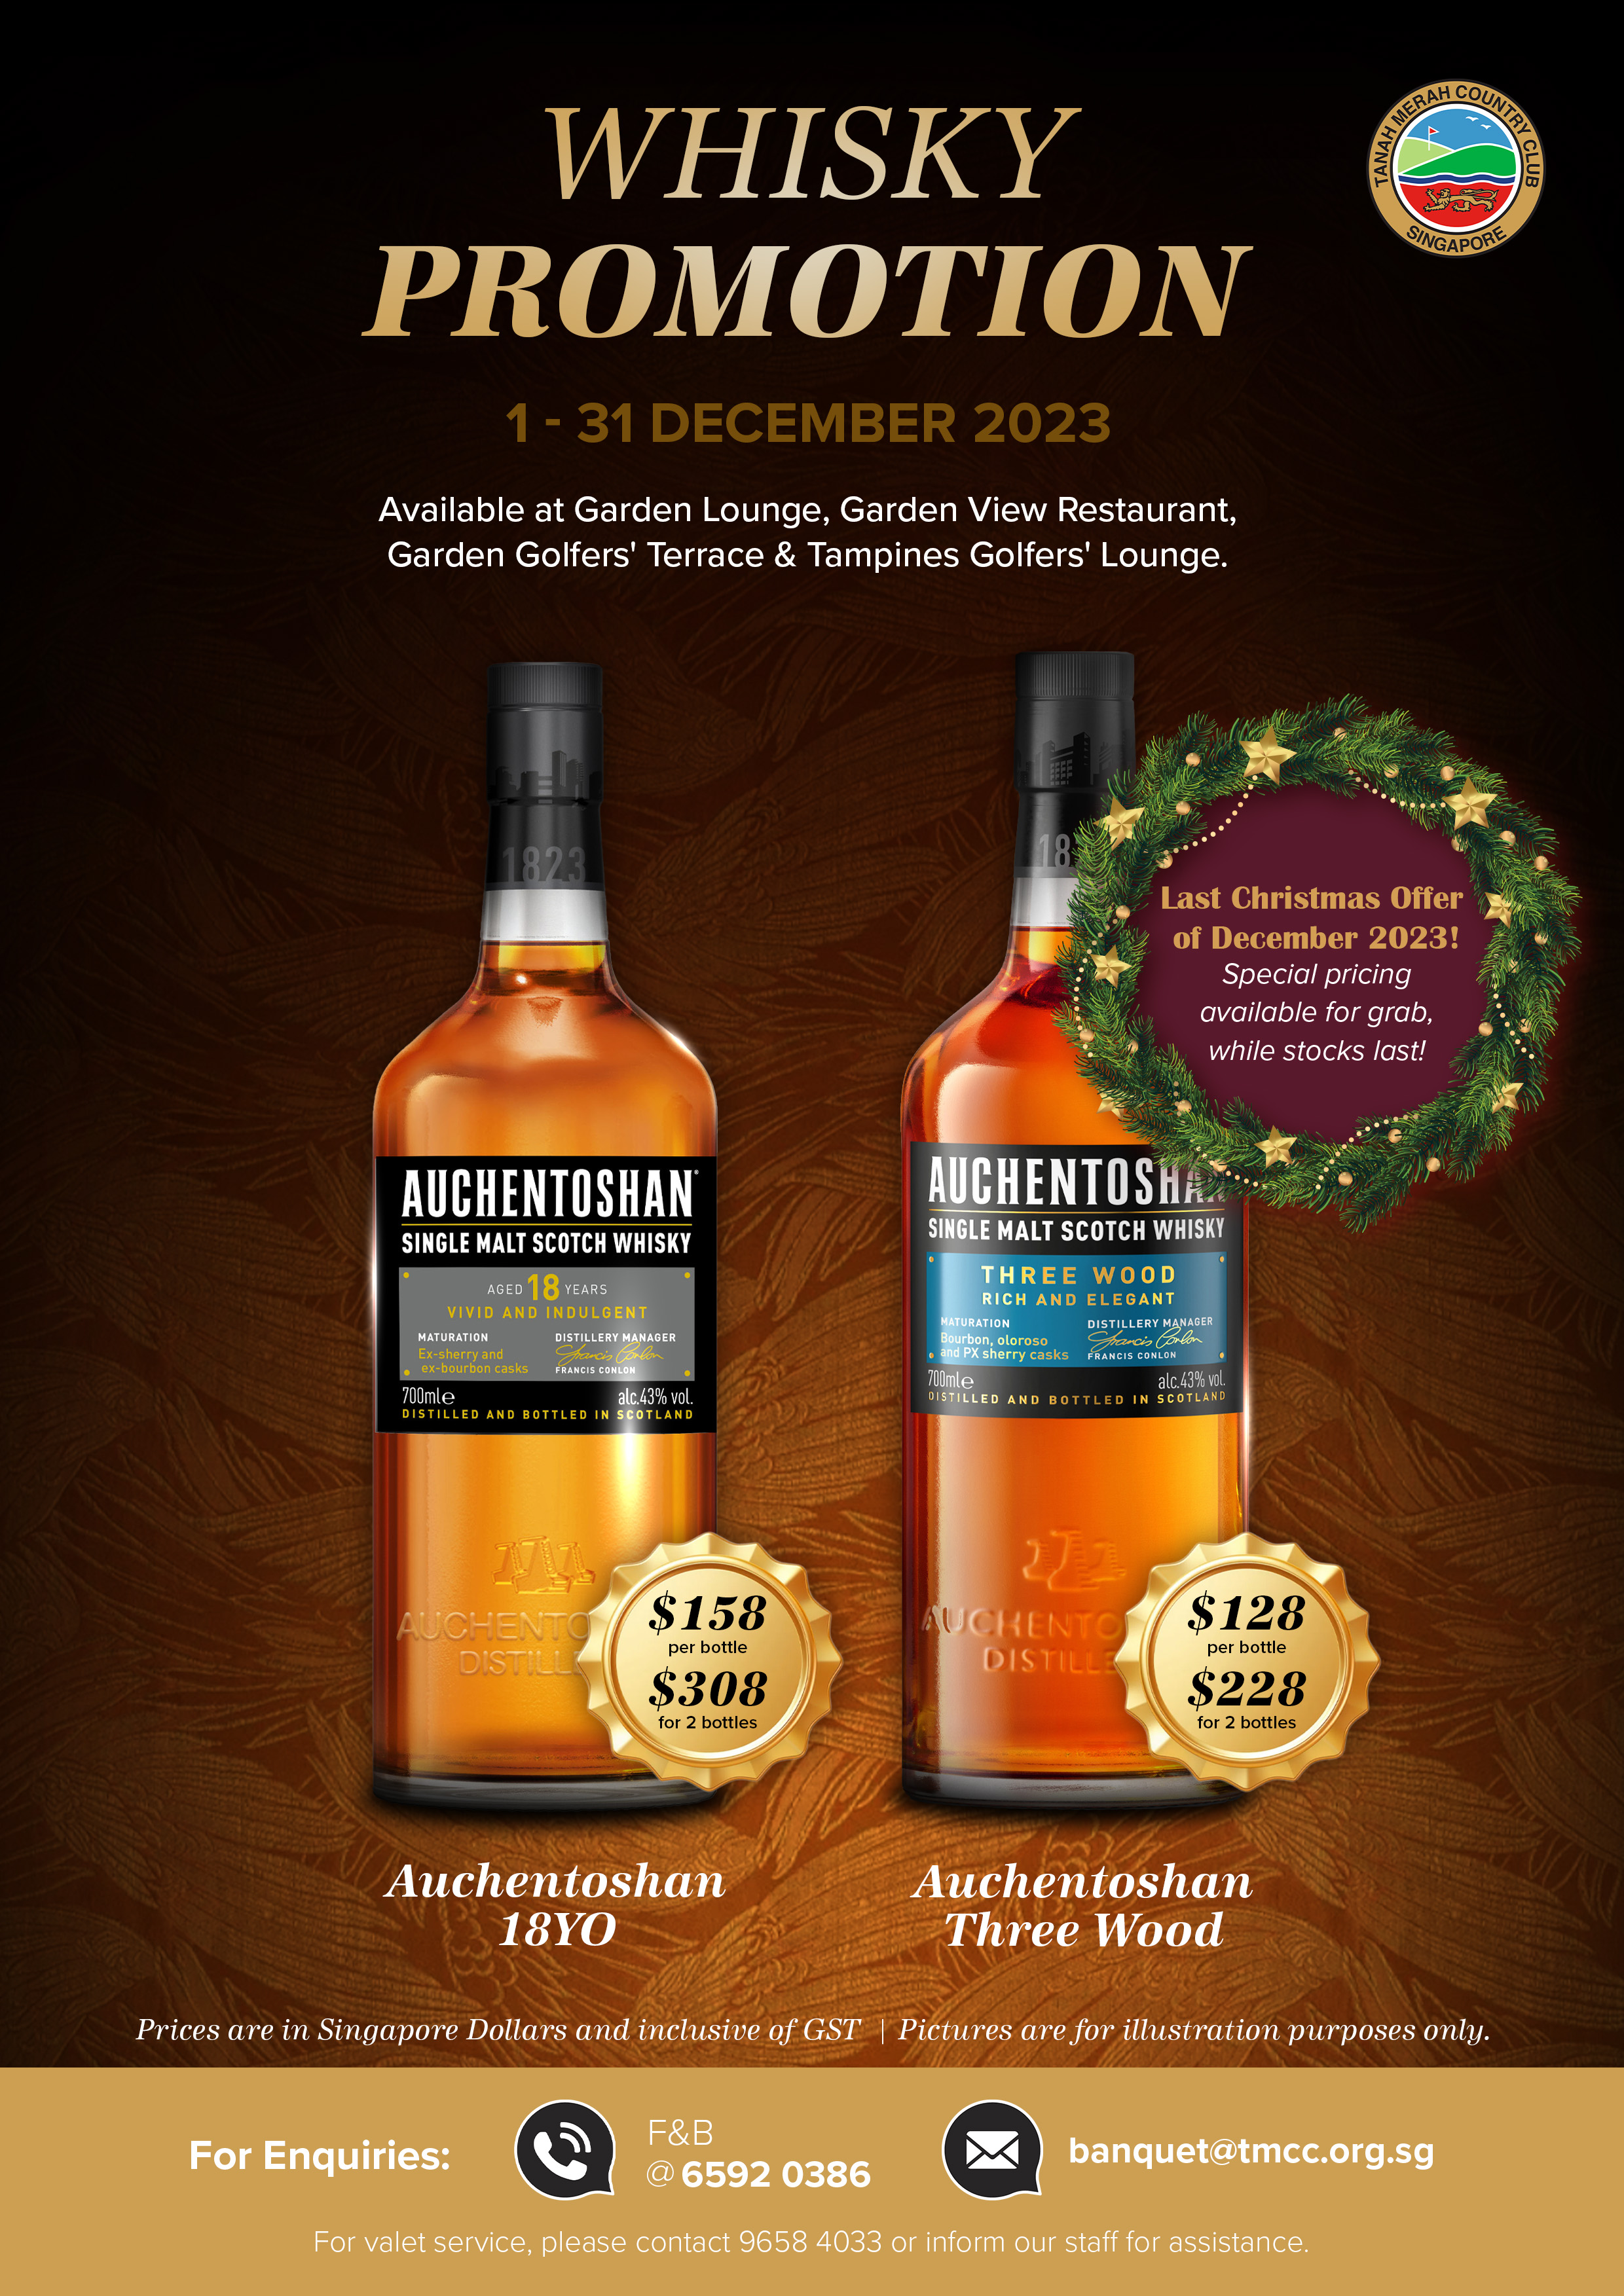 Auchentoshan Whisky Promotion [1 - 31 December 2023] - TMCC